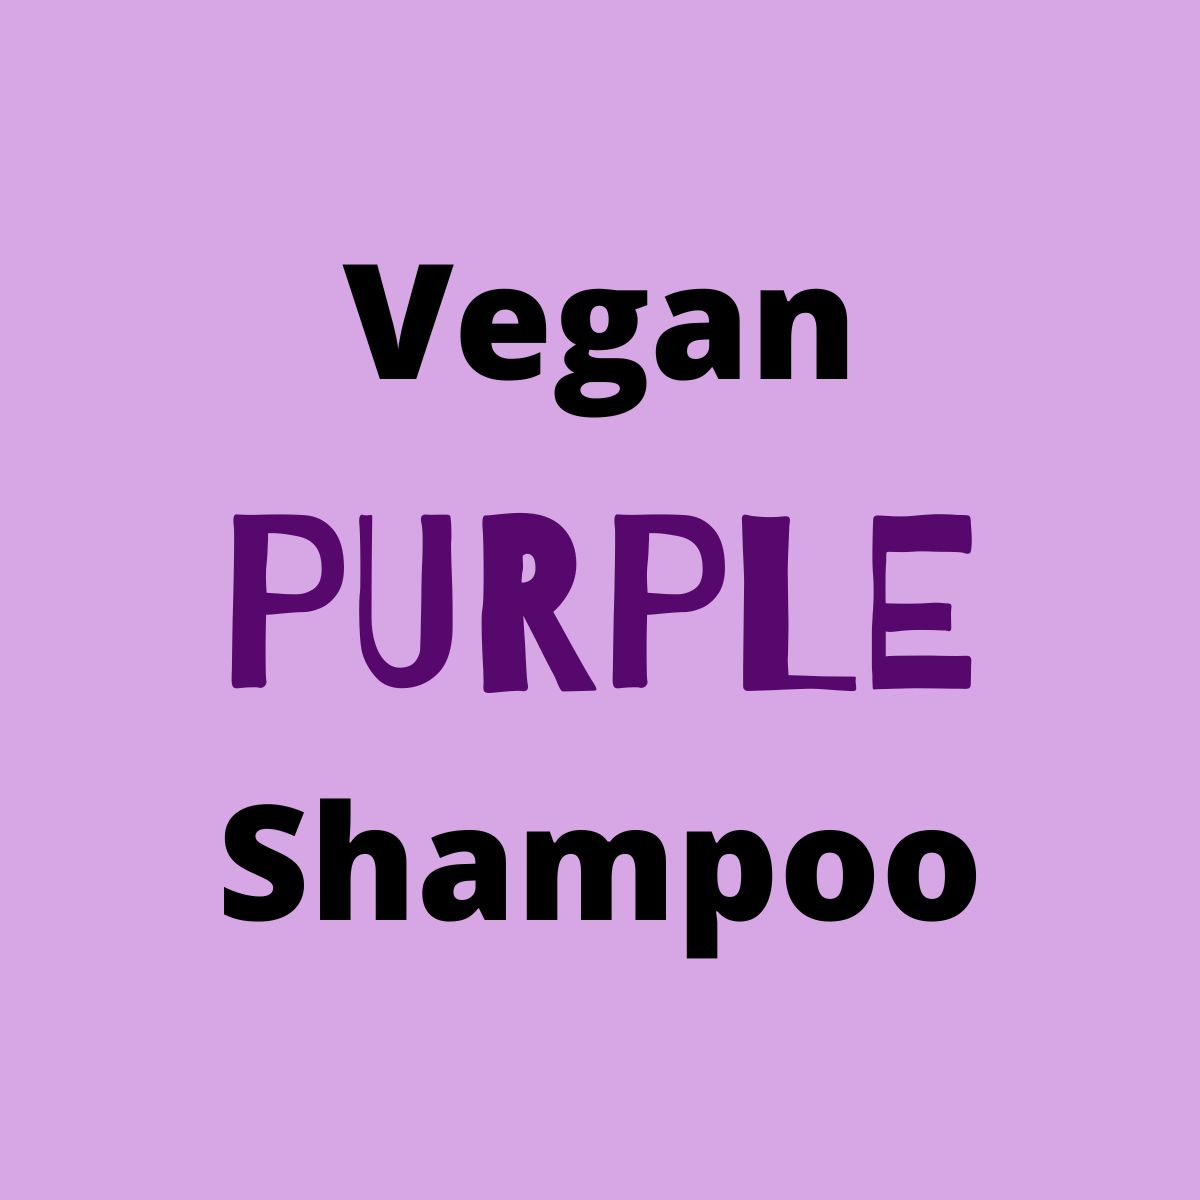 Purple square with text that says Vegan Purple Shampoo.